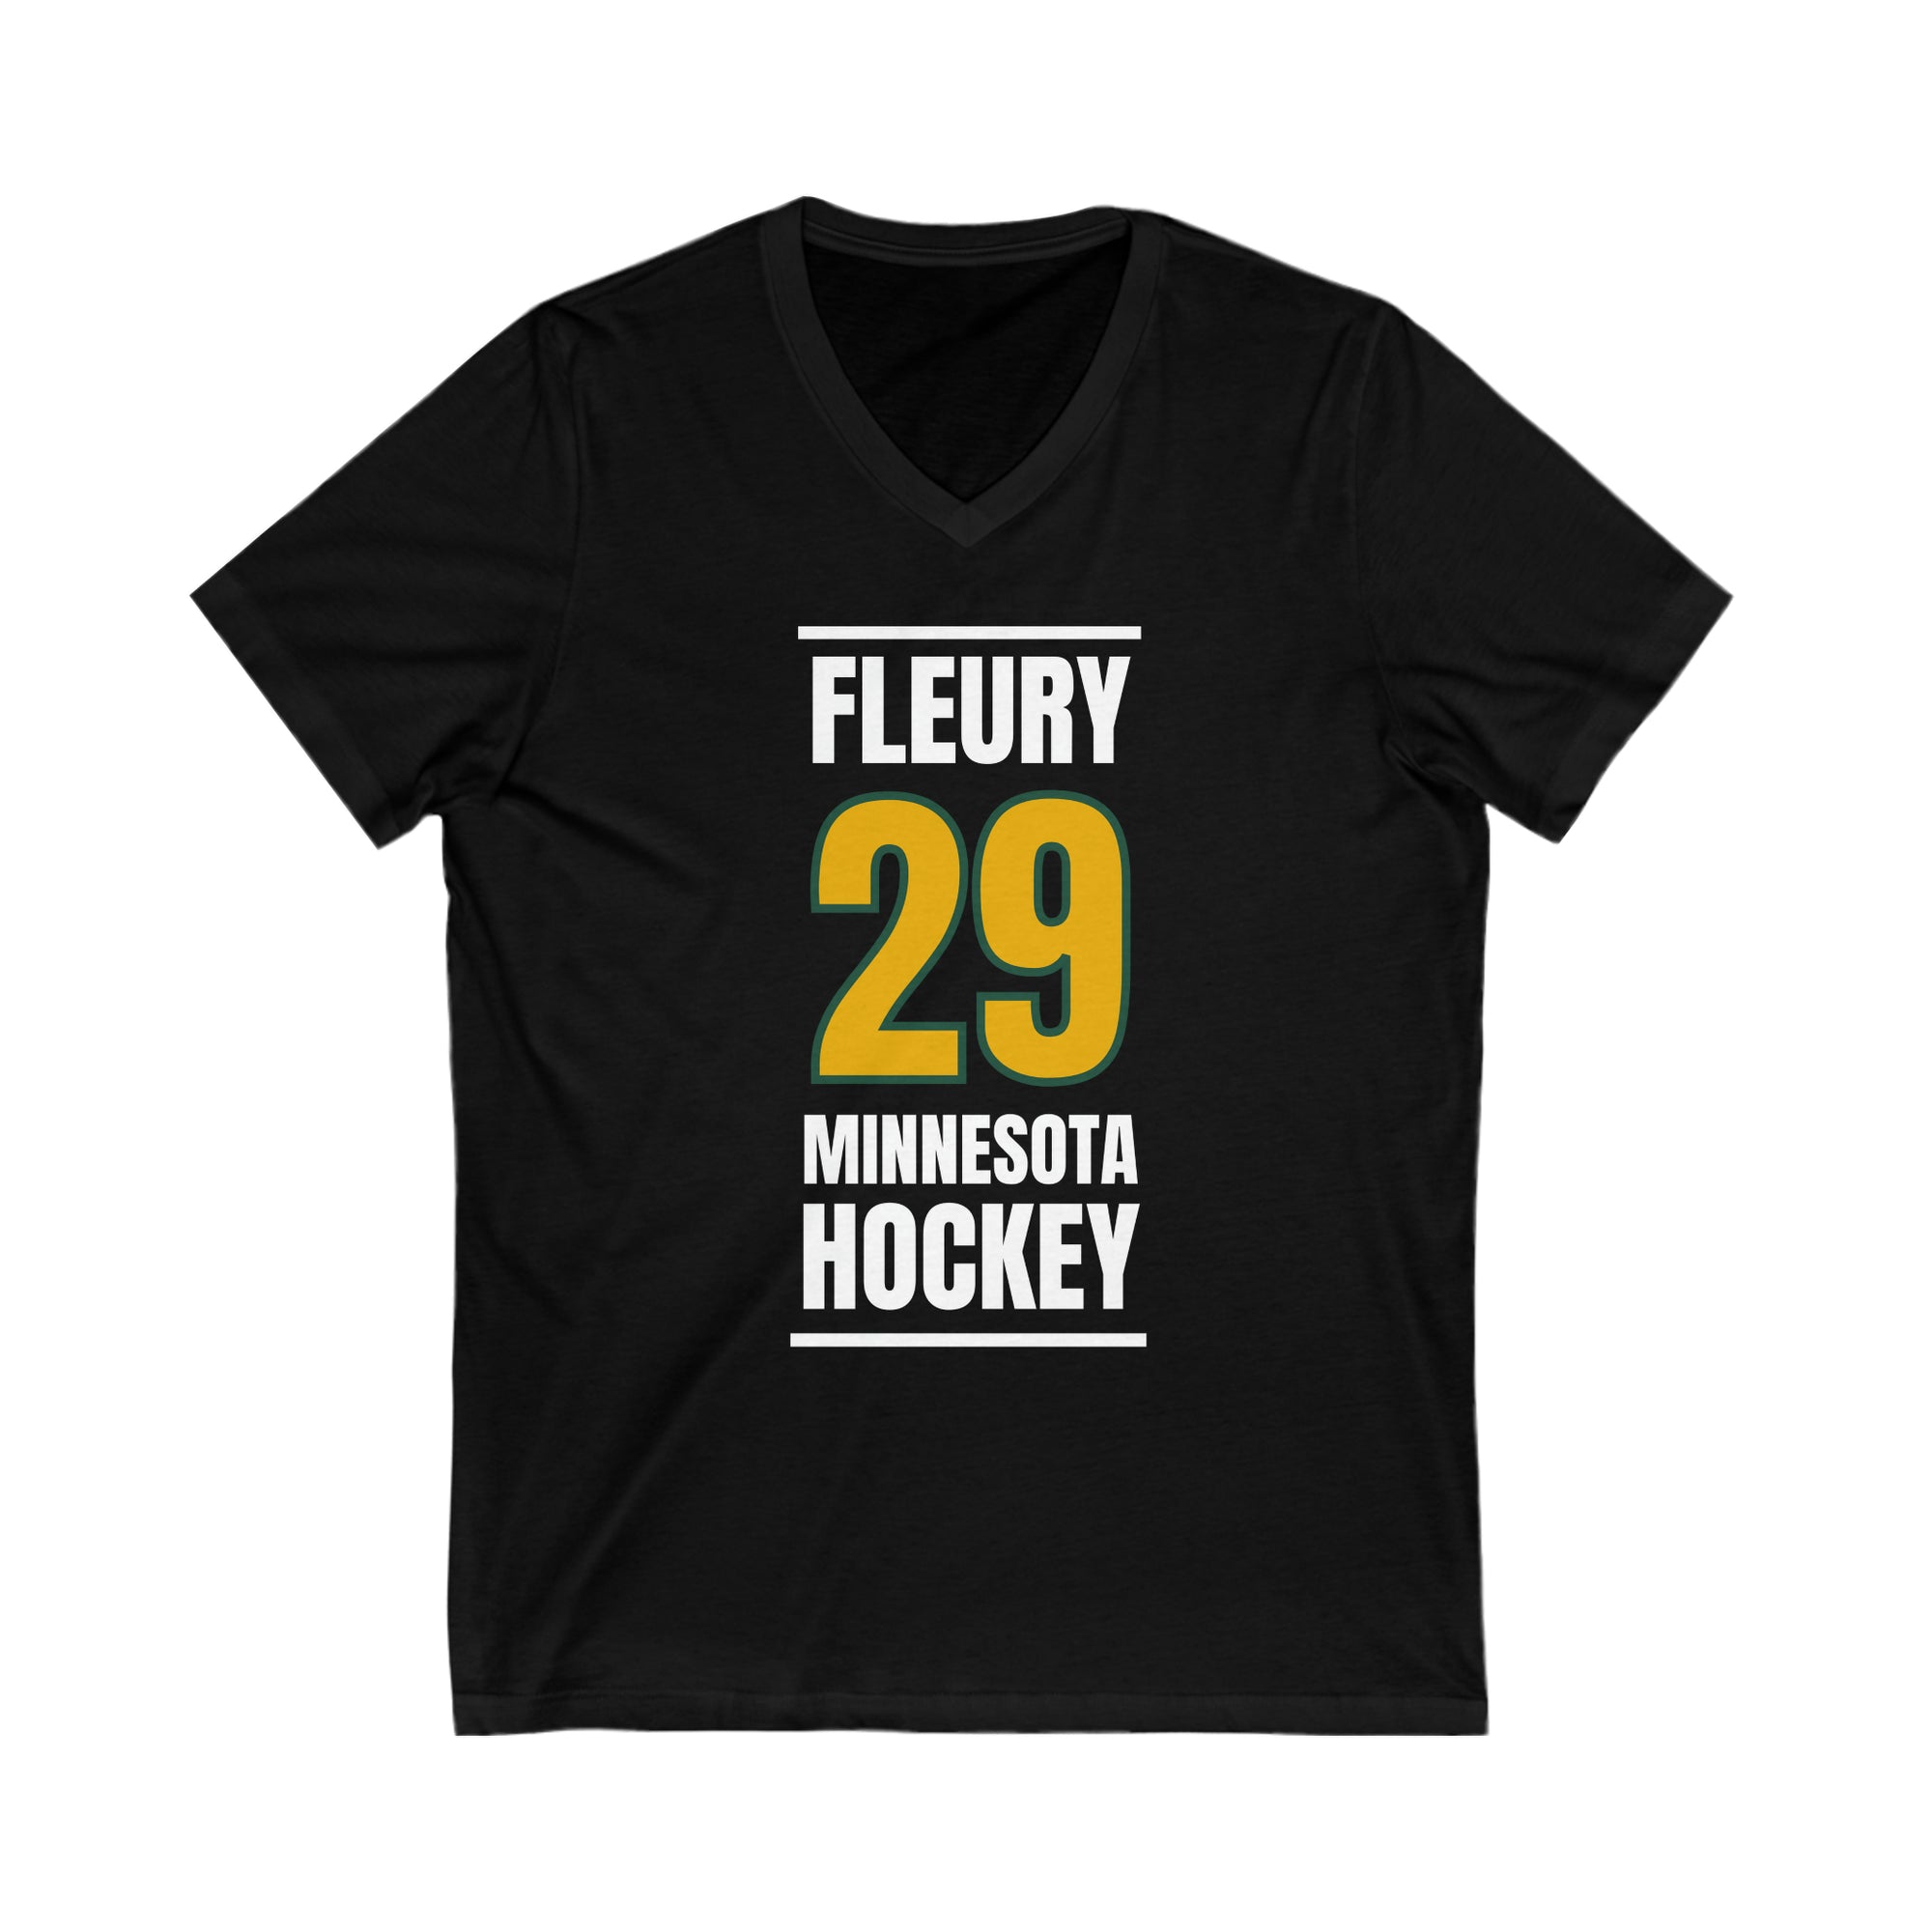 Fleury 29 Minnesota Hockey Gold Vertical Design Unisex V-Neck Tee